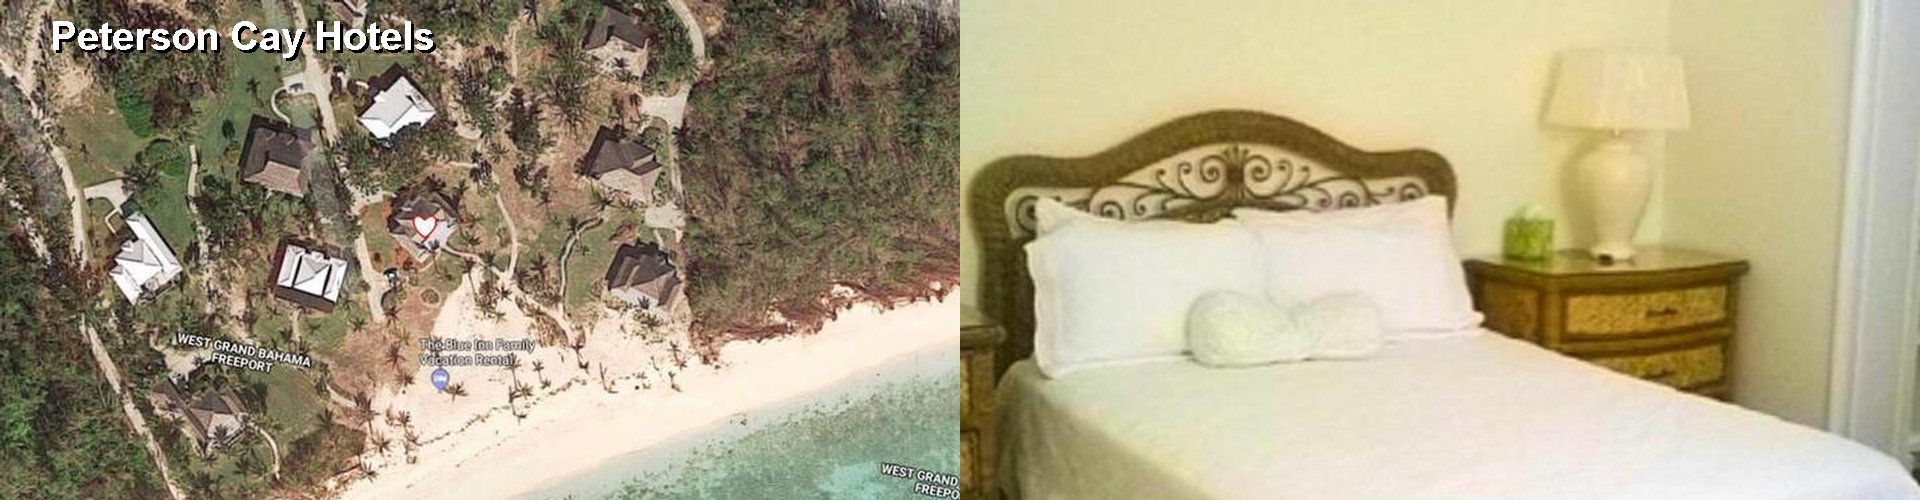 5 Best Hotels near Peterson Cay